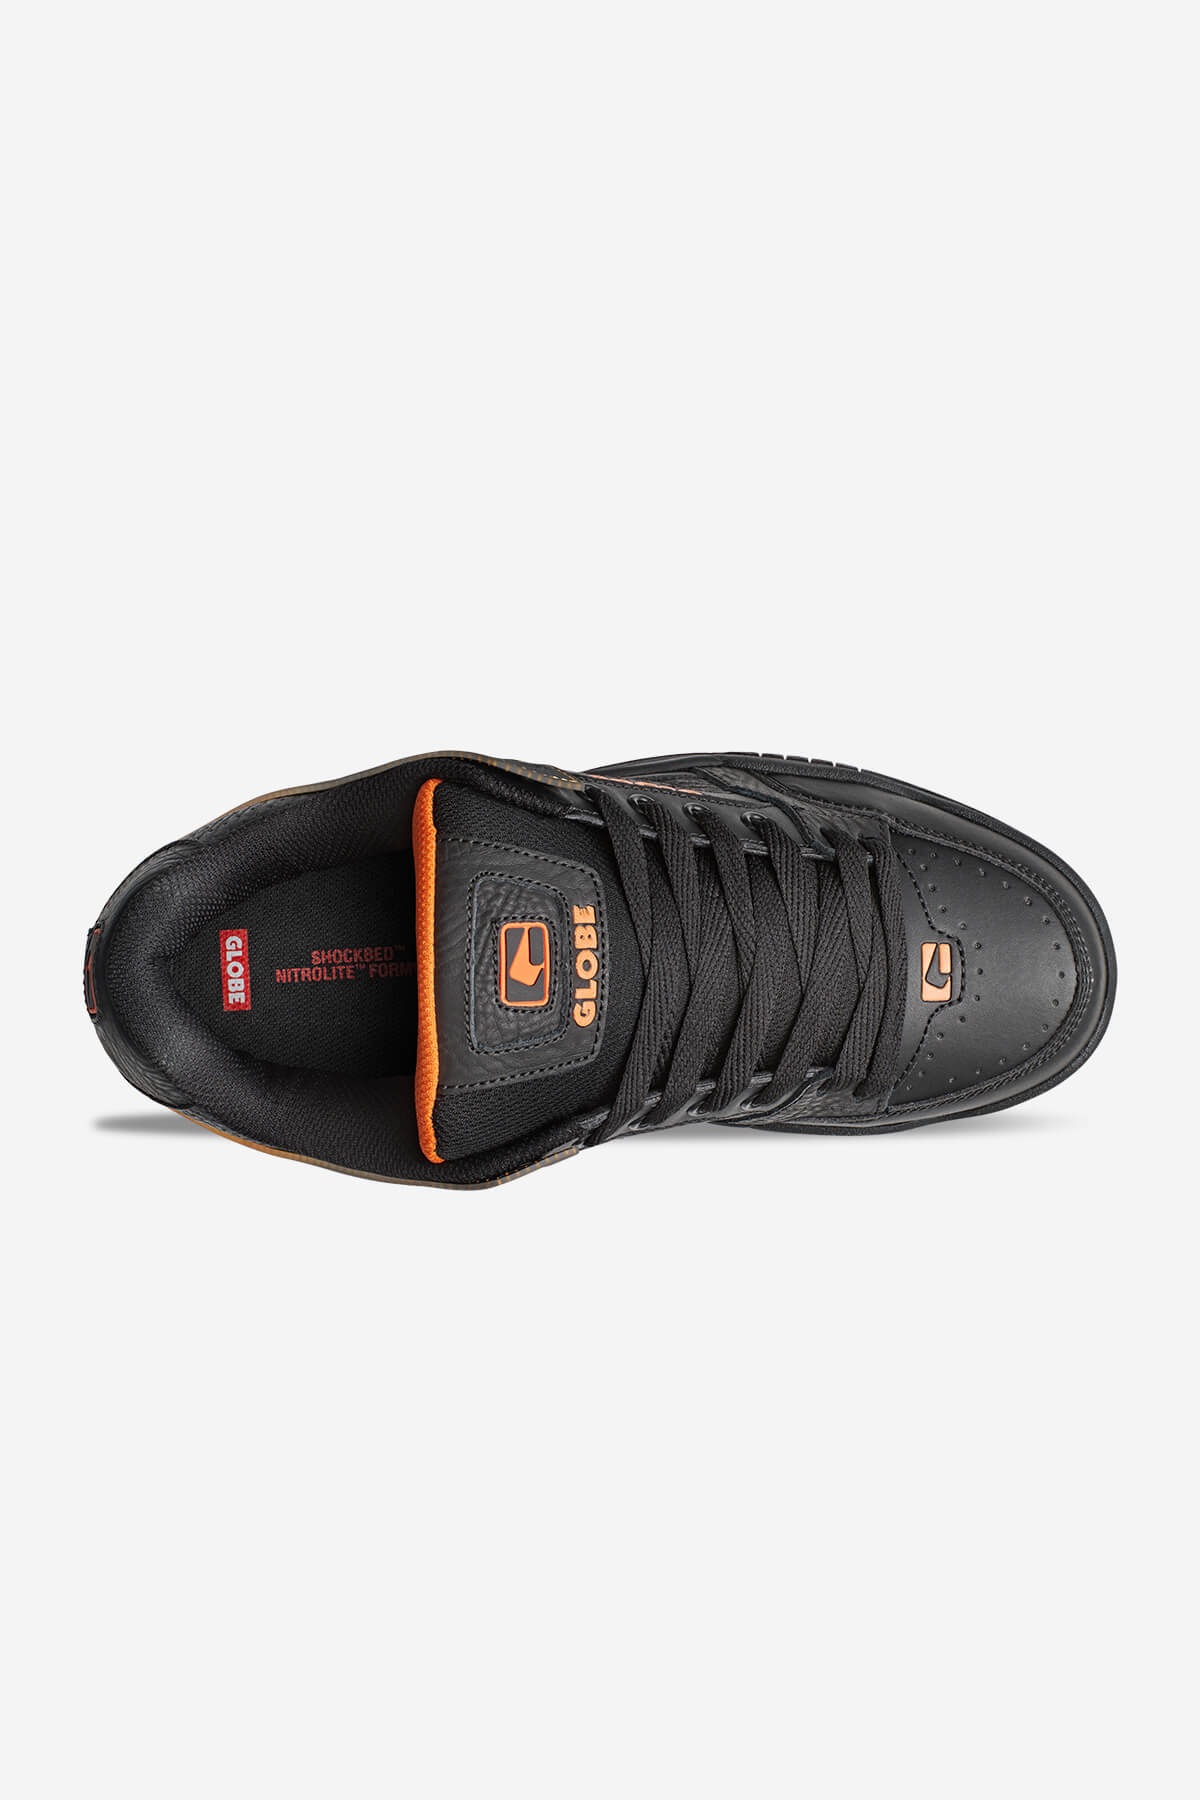 tilt noir orange fade skateboard chaussures